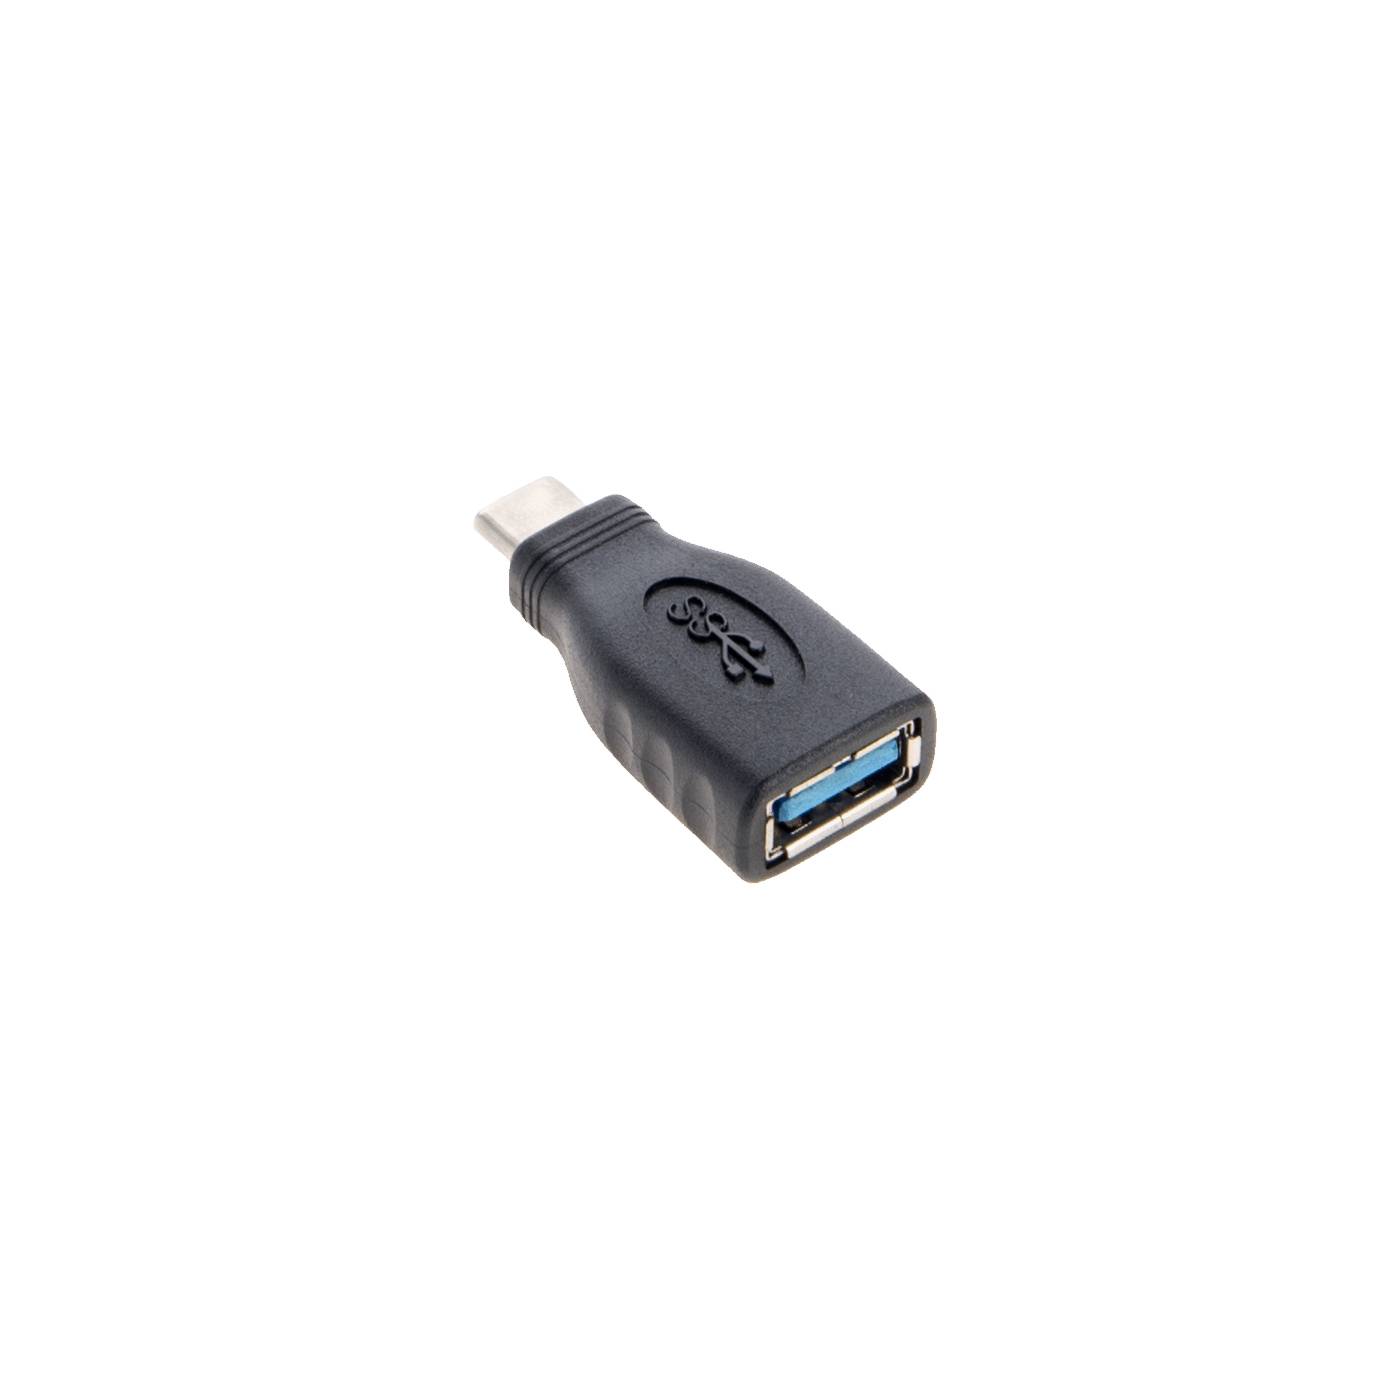 Rca Informatique - image du produit : JABRA USB-C ADAPTER USB-A ADAPTER TO USB-C